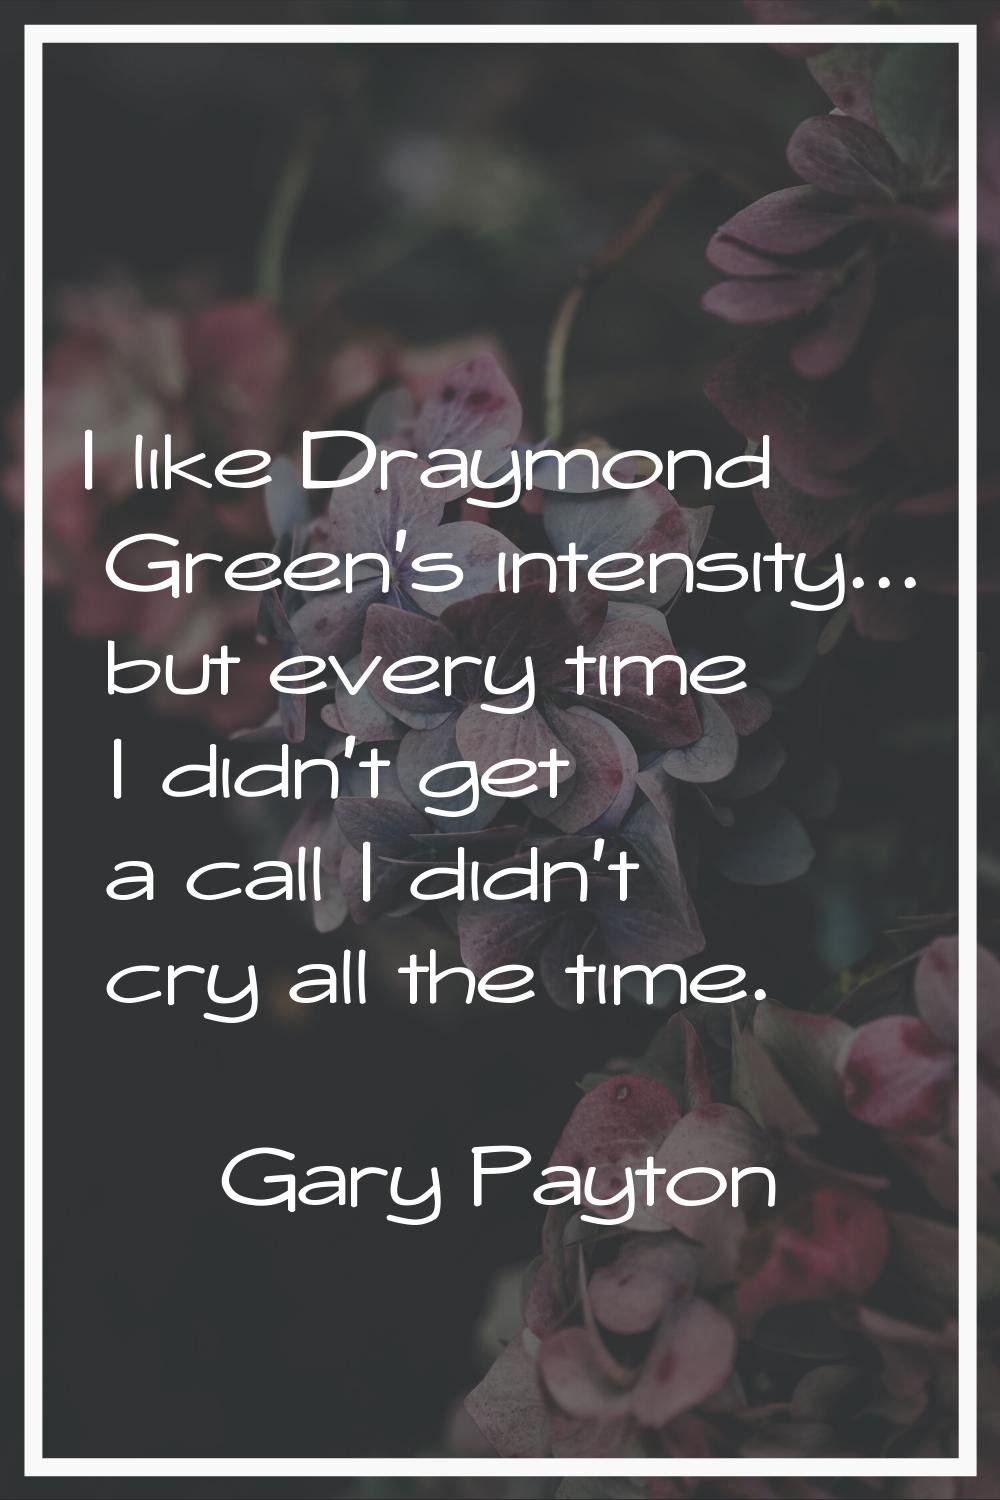 I like Draymond Green's intensity... but every time I didn't get a call I didn't cry all the time.